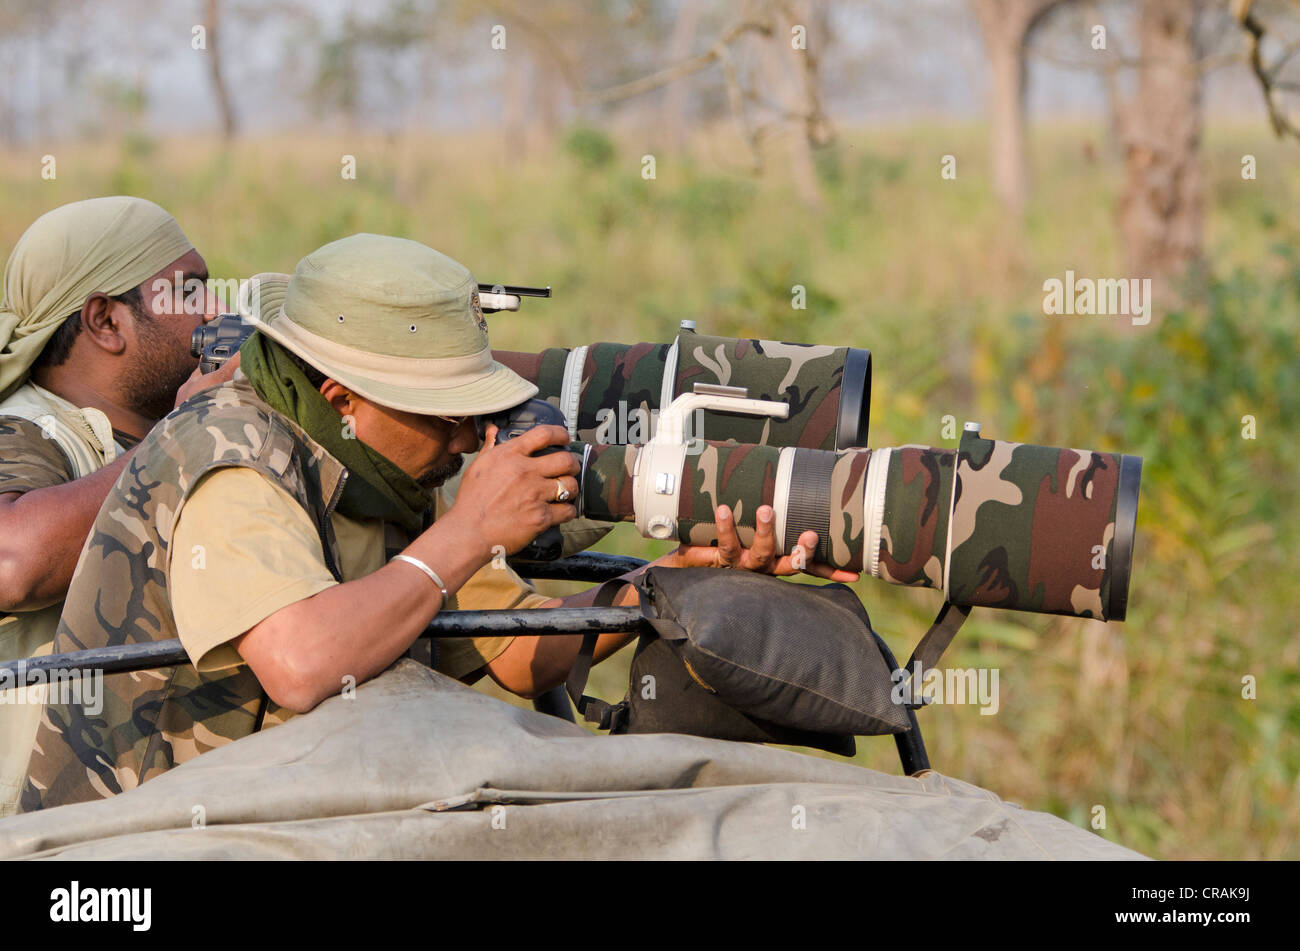 Vida salvaje india fotógrafos con teleobjetivos, el Parque Nacional de Kaziranga, en Assam, al noreste de la India, India, Asia Foto de stock